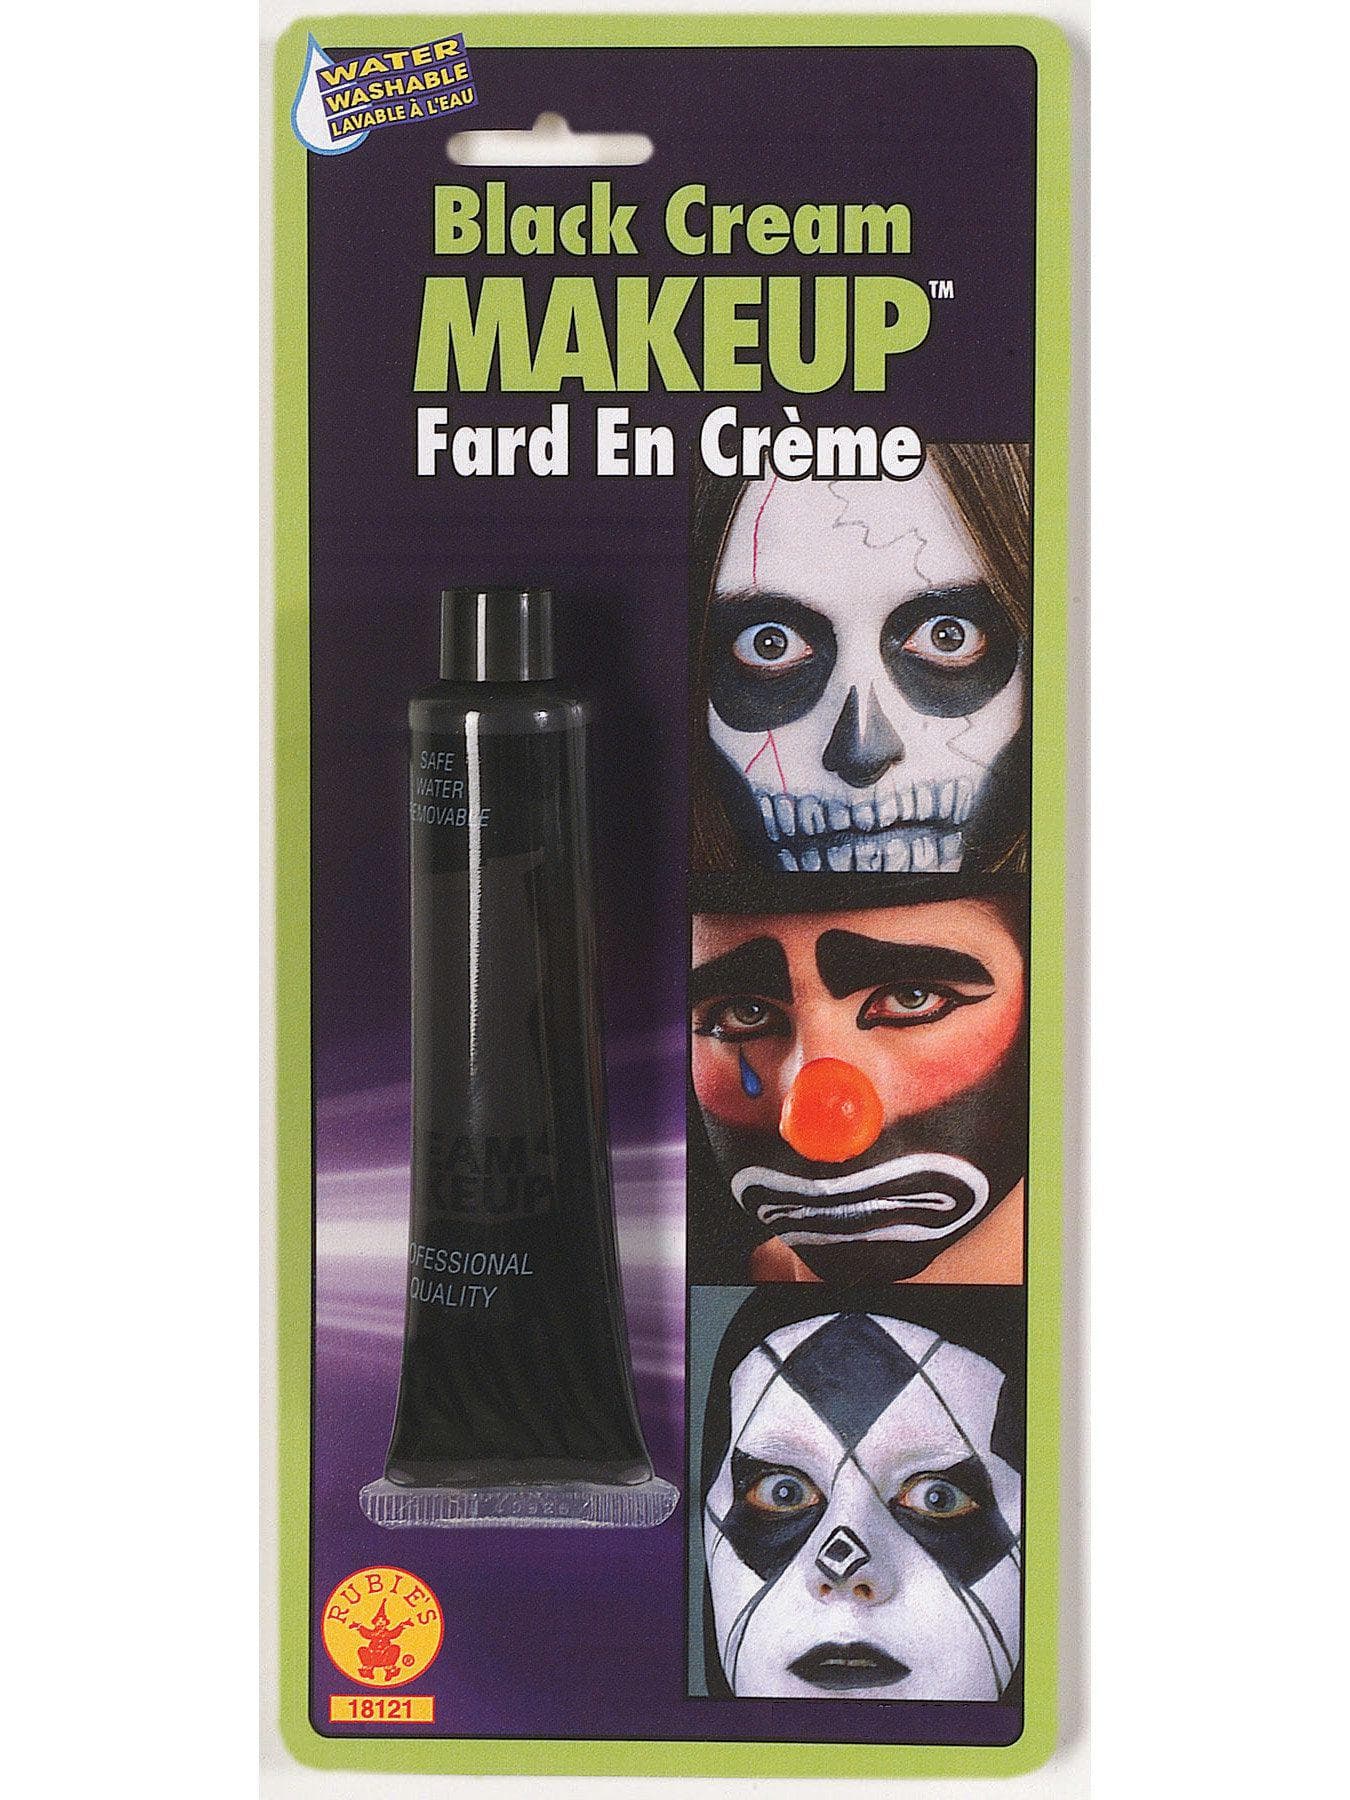 Black Cream Face Paint Makeup - costumes.com